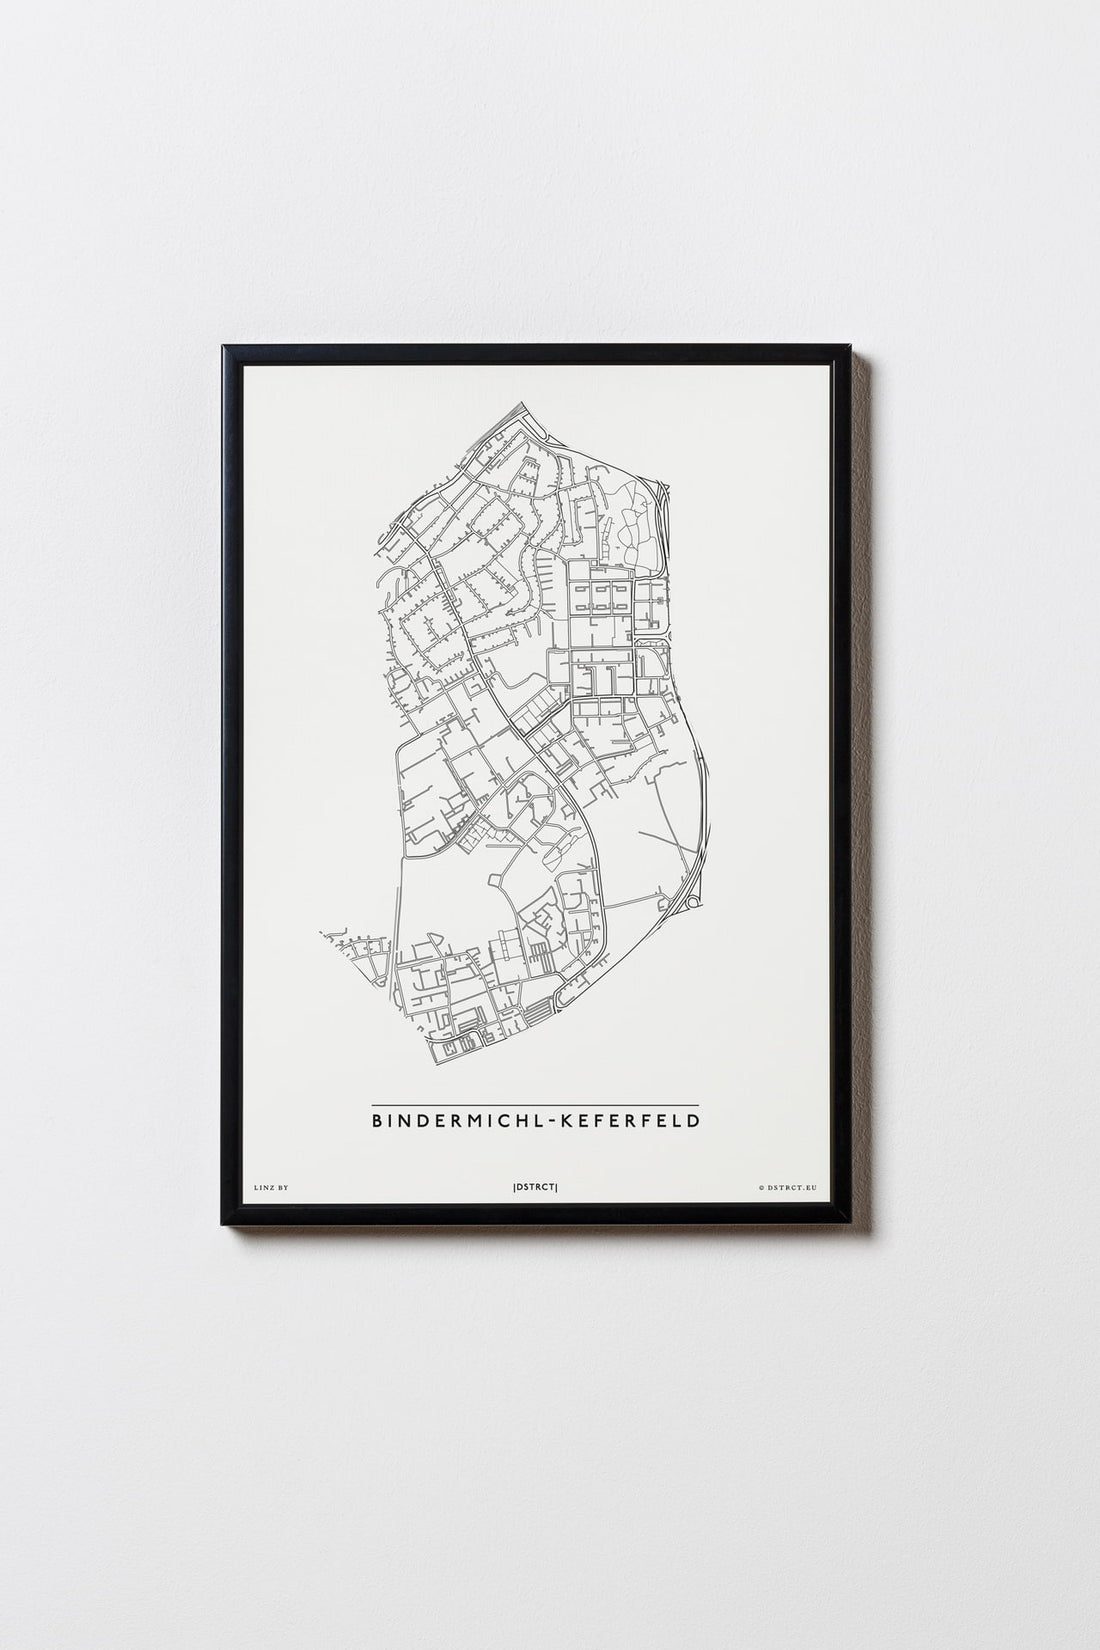 Bindermichl-Keferfeld | 4020 | Linz | City Map Karte Plan Bild Print Poster Mit Rahmen Framed